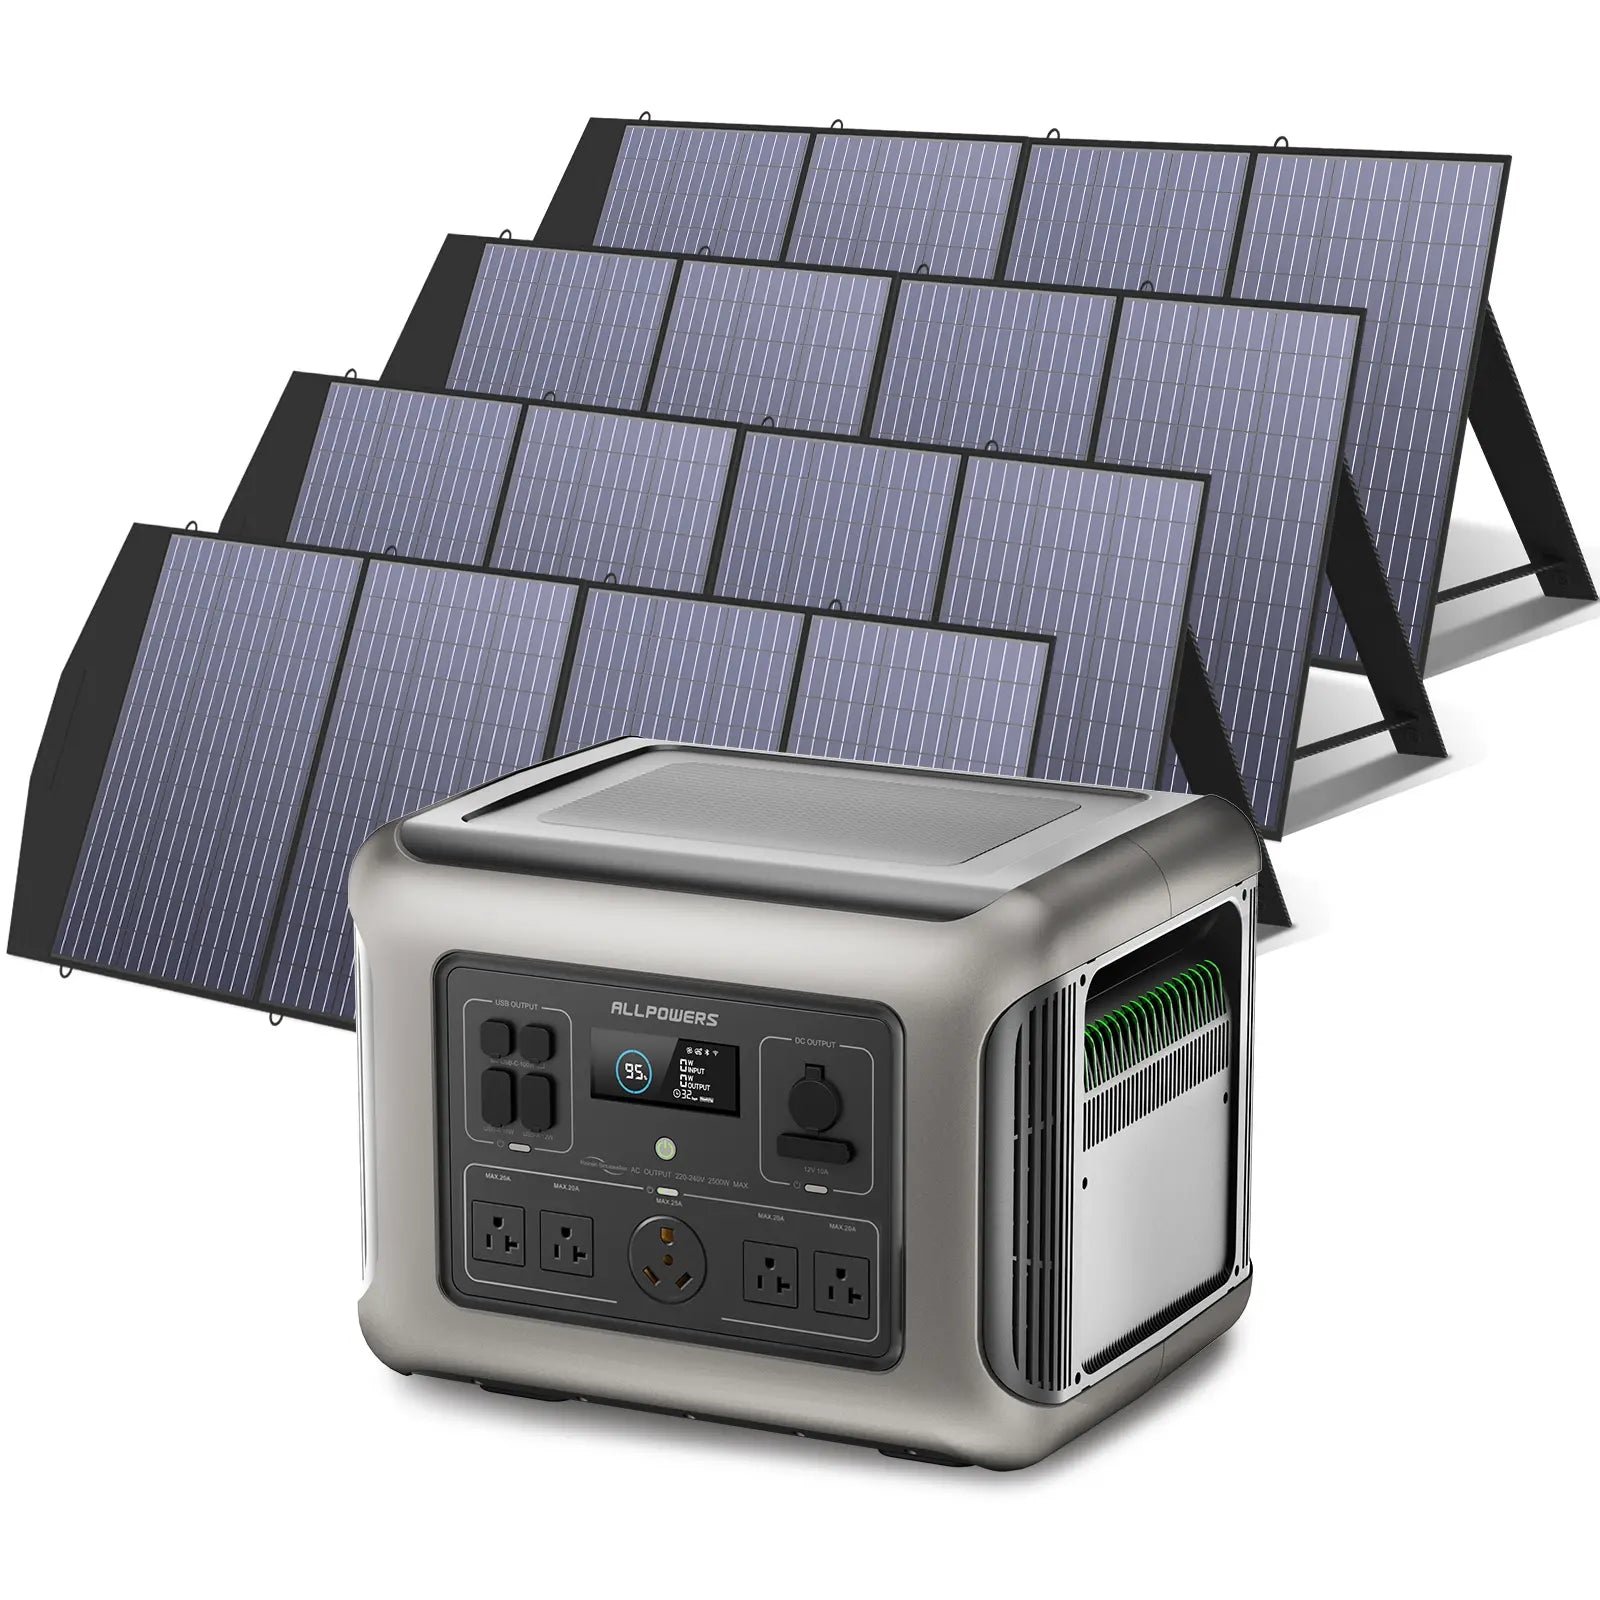 ALLPOWERS Solar Generator Kit 2500W (R2500 + 4 x SP033 200W Solar Panel)